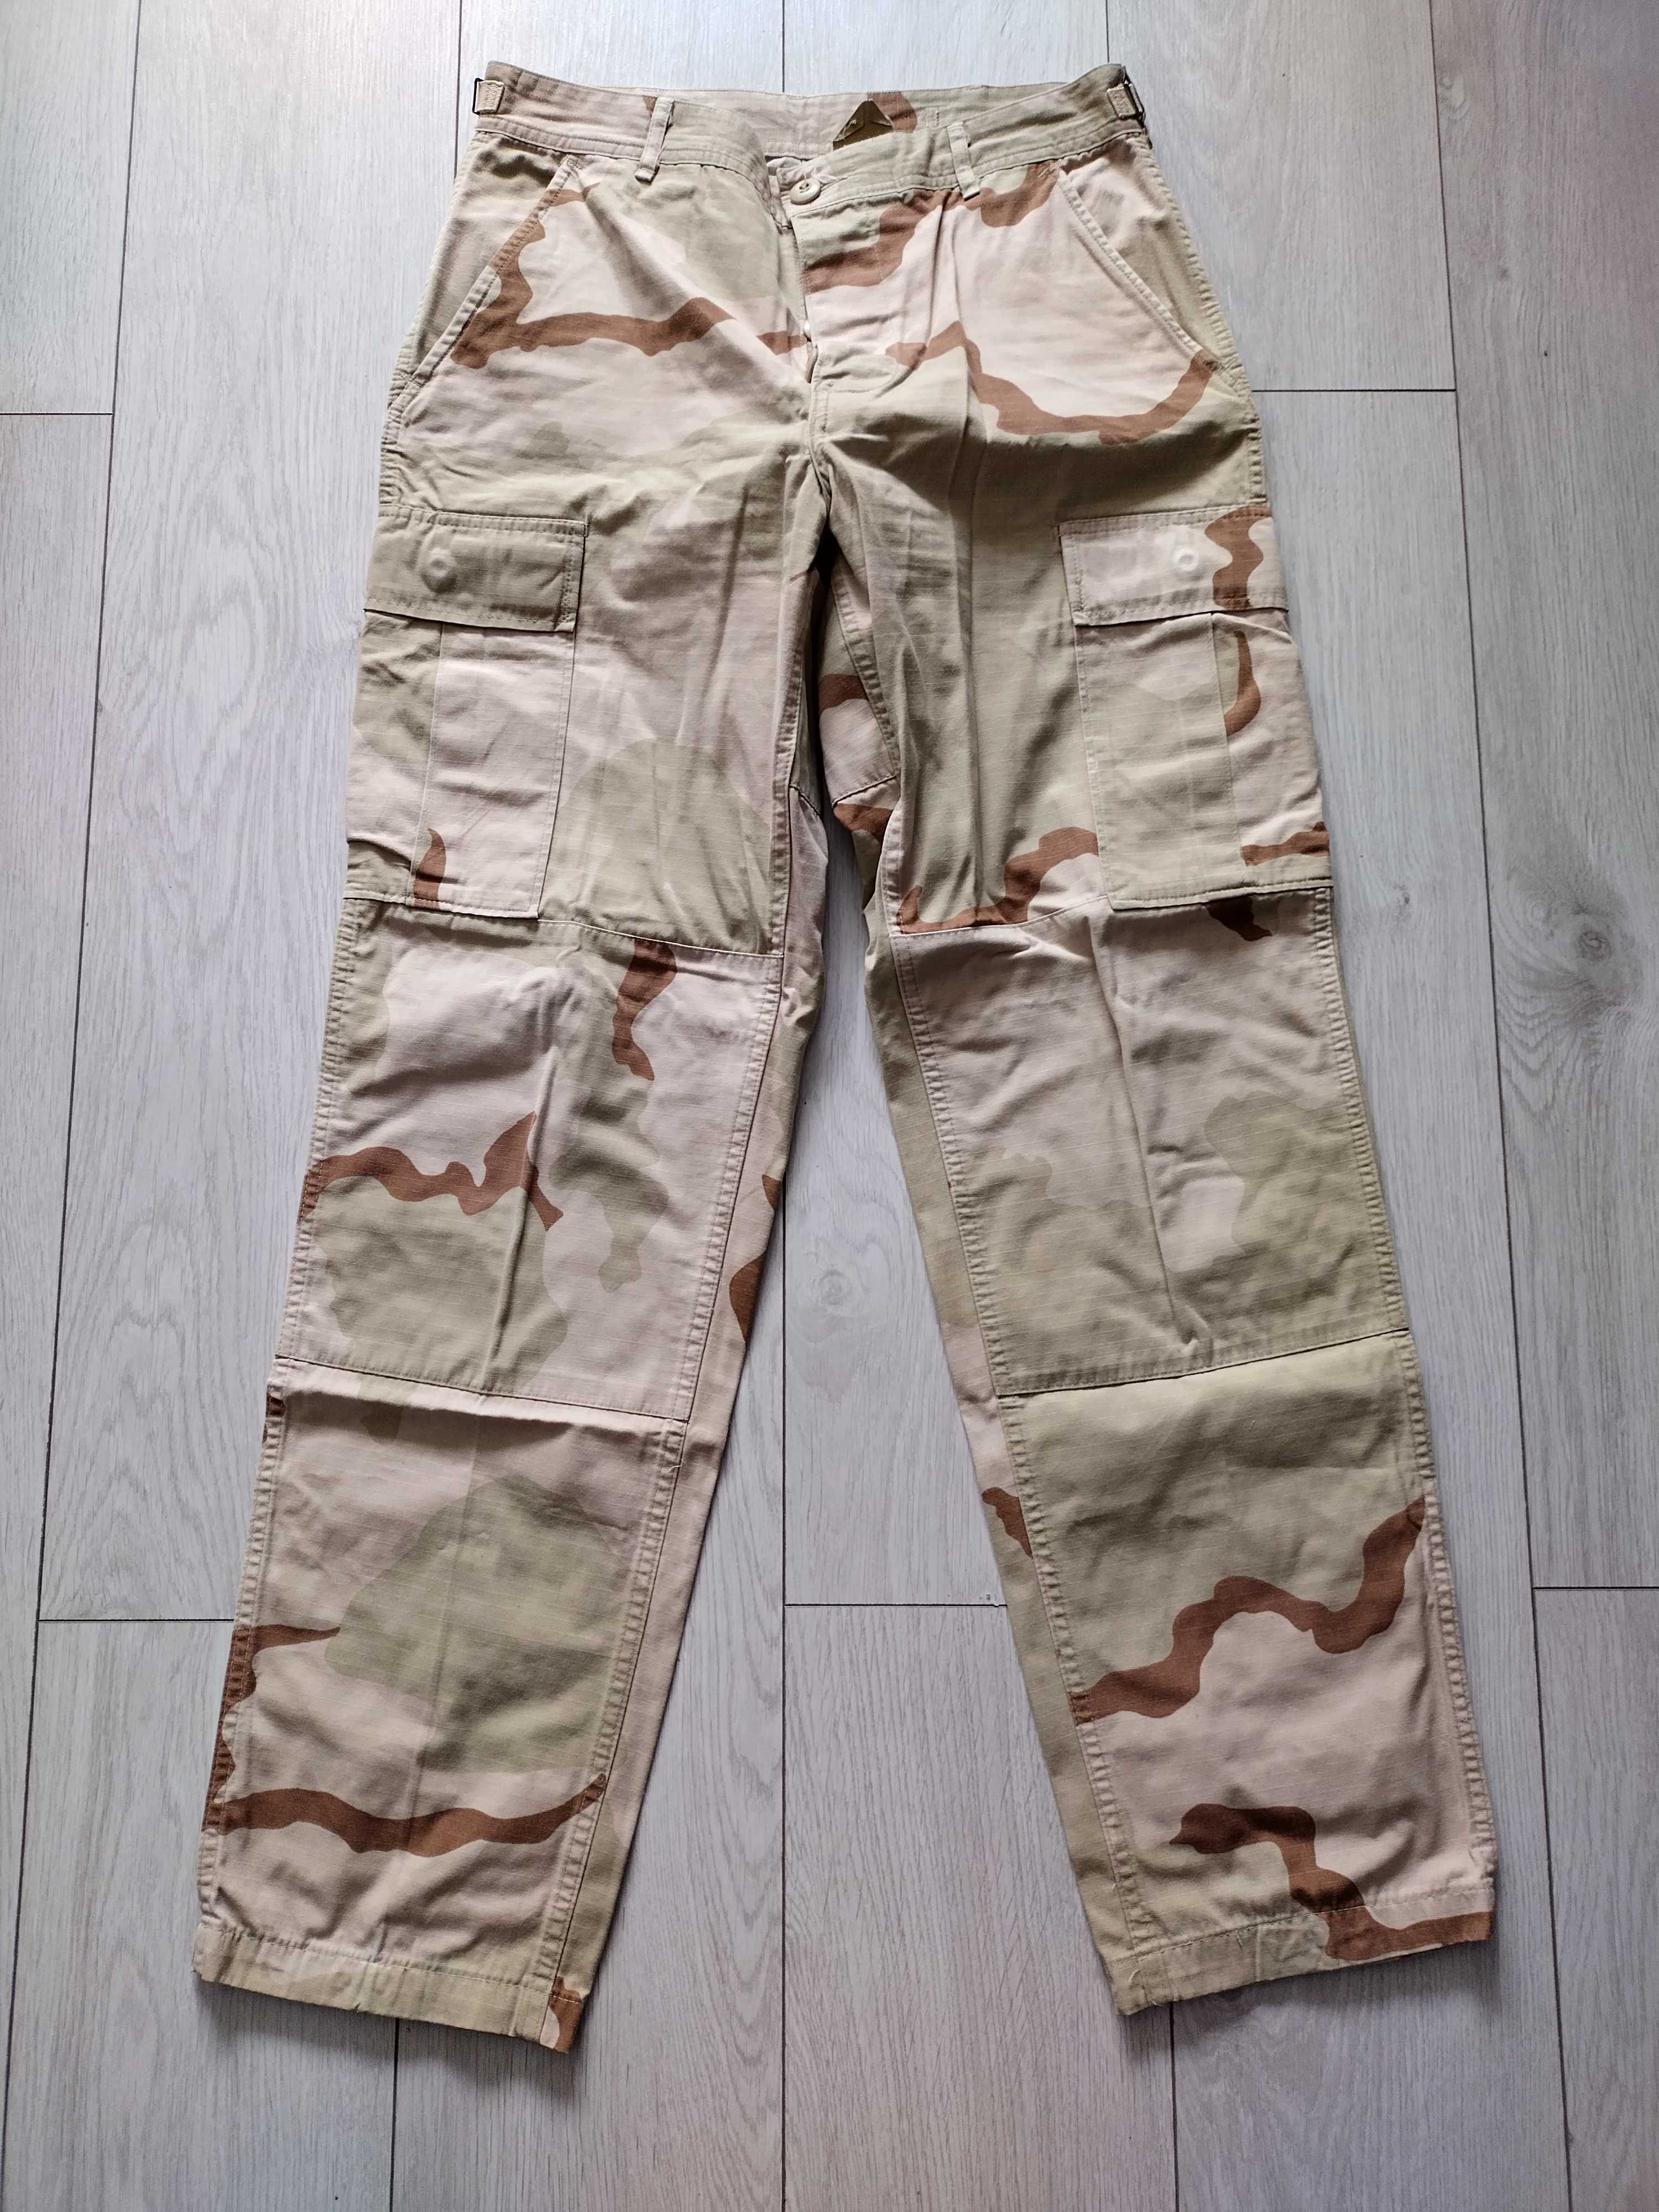 Spodnie BDU 3 color US Army pustynne,rozmiar Small-Regular,small-xlong